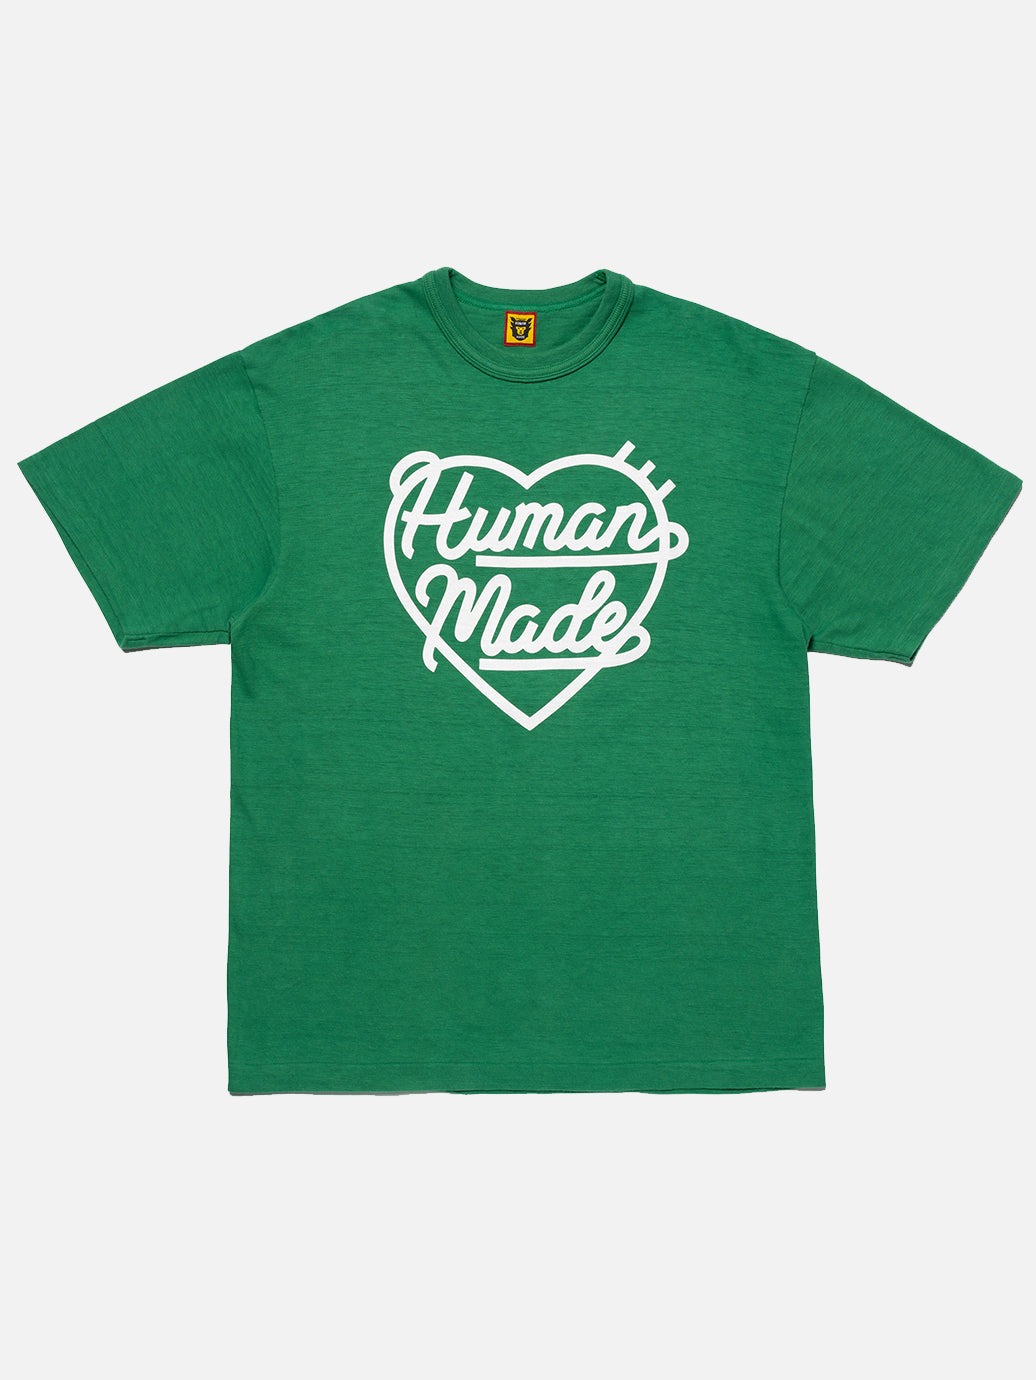 Human Made Color T-Shirt #2